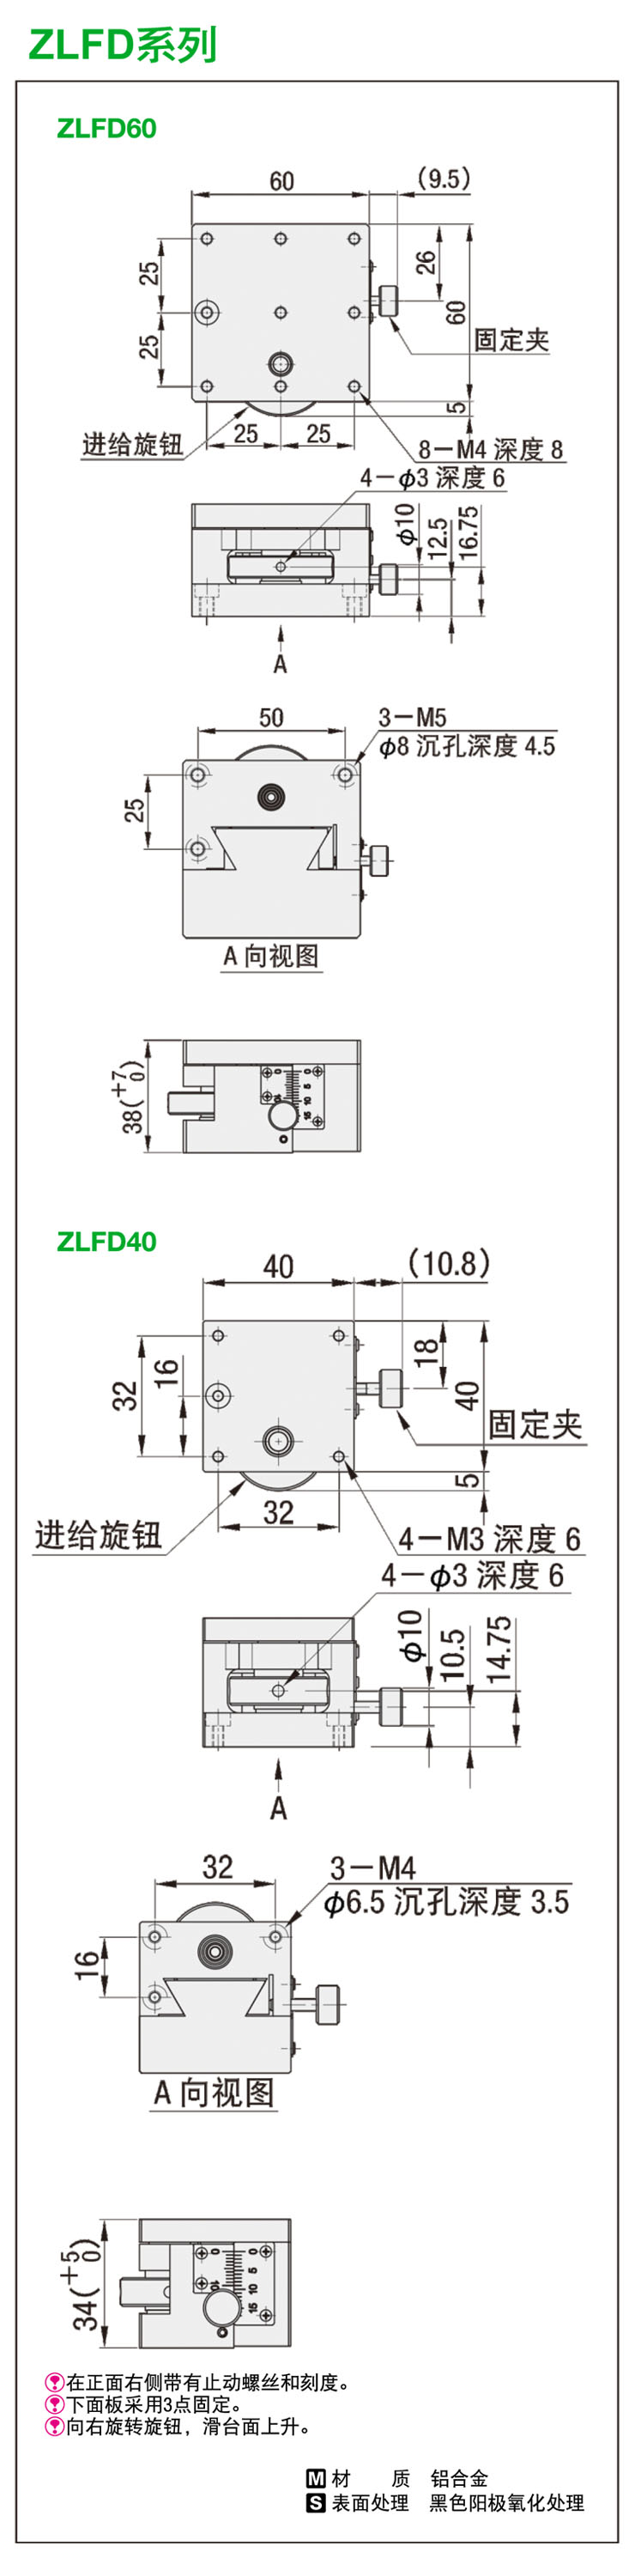 ZLFD尺寸-1.jpg